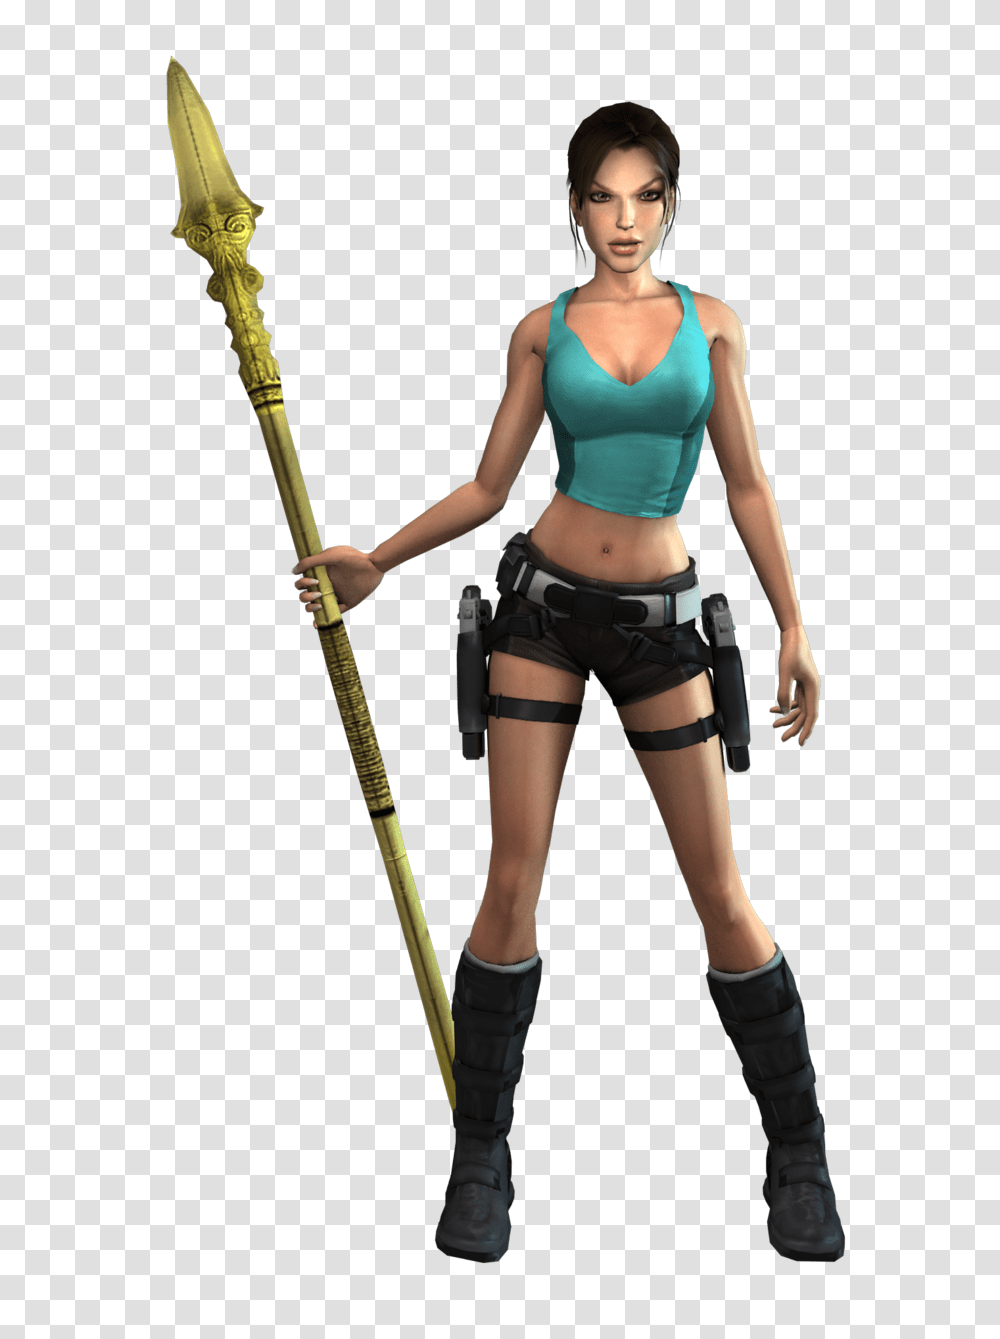 Nathan Drake Vs Lara Croft, Person, Costume, Weapon Transparent Png